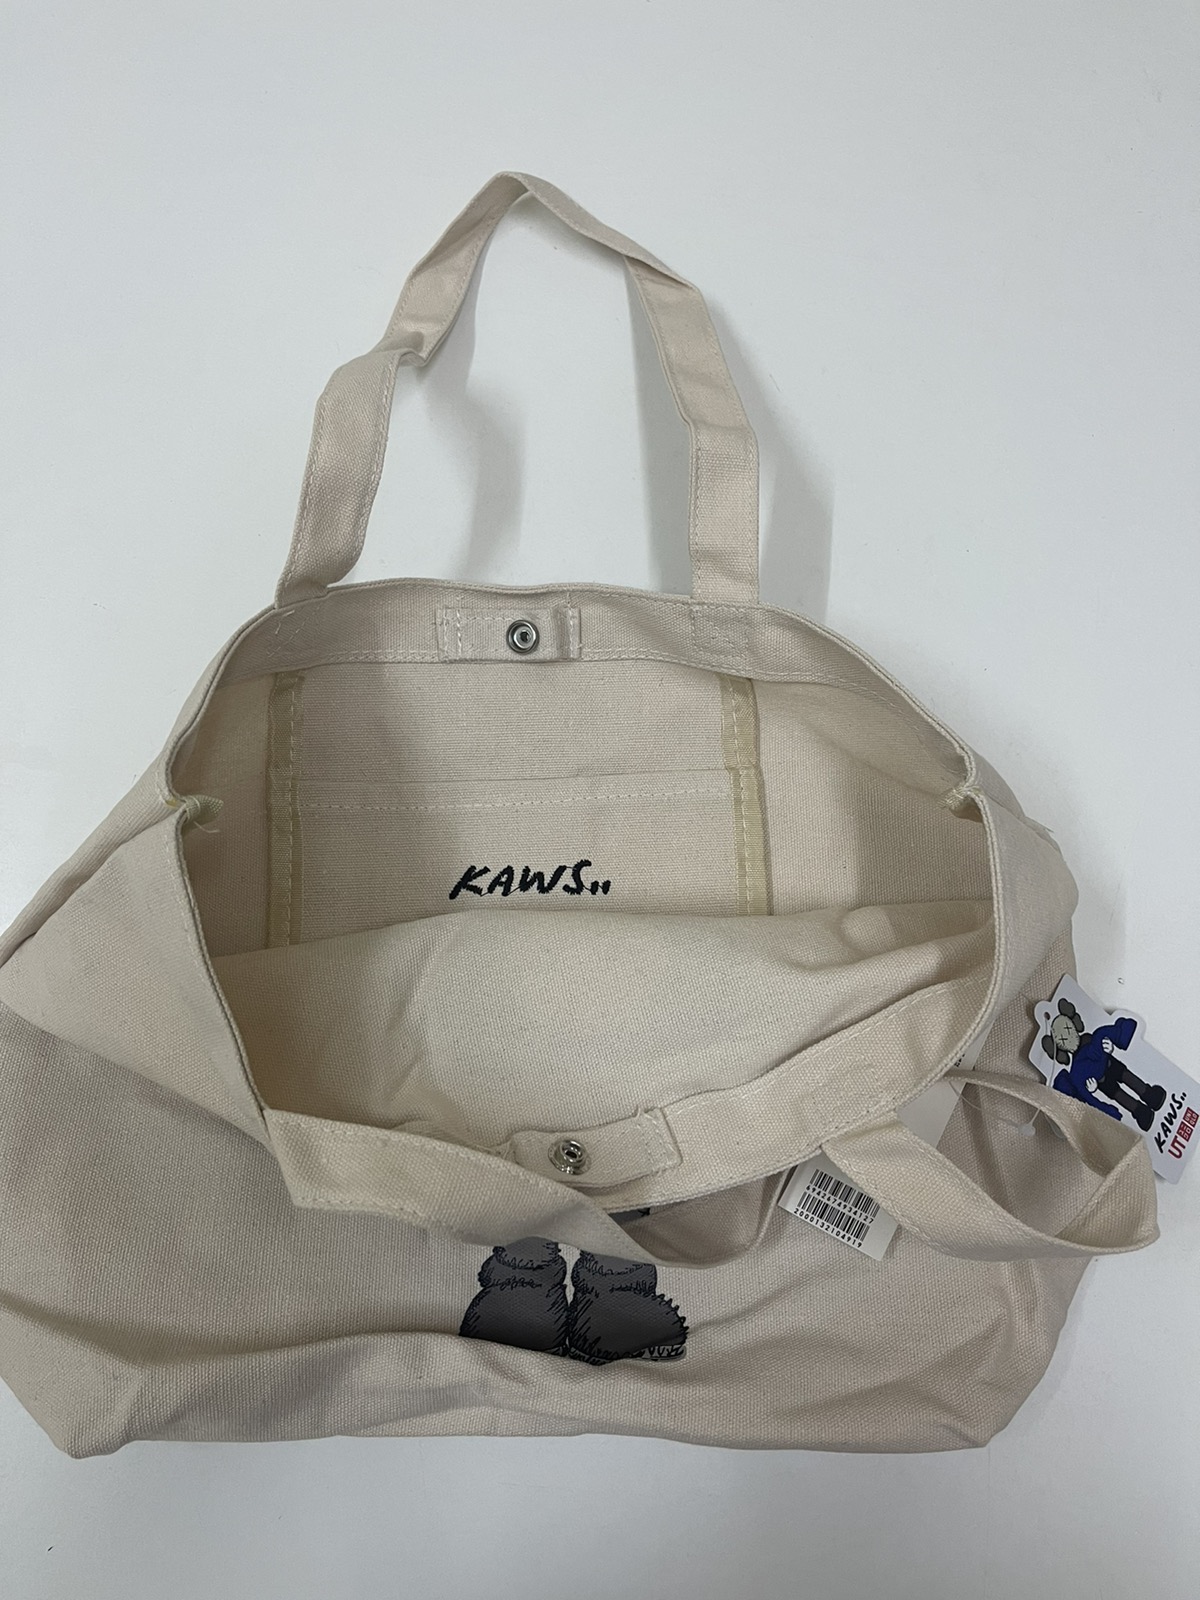 Very Rare - Kaws Tote Bag Limited Edition / Uniqlo / Evangelion - 7